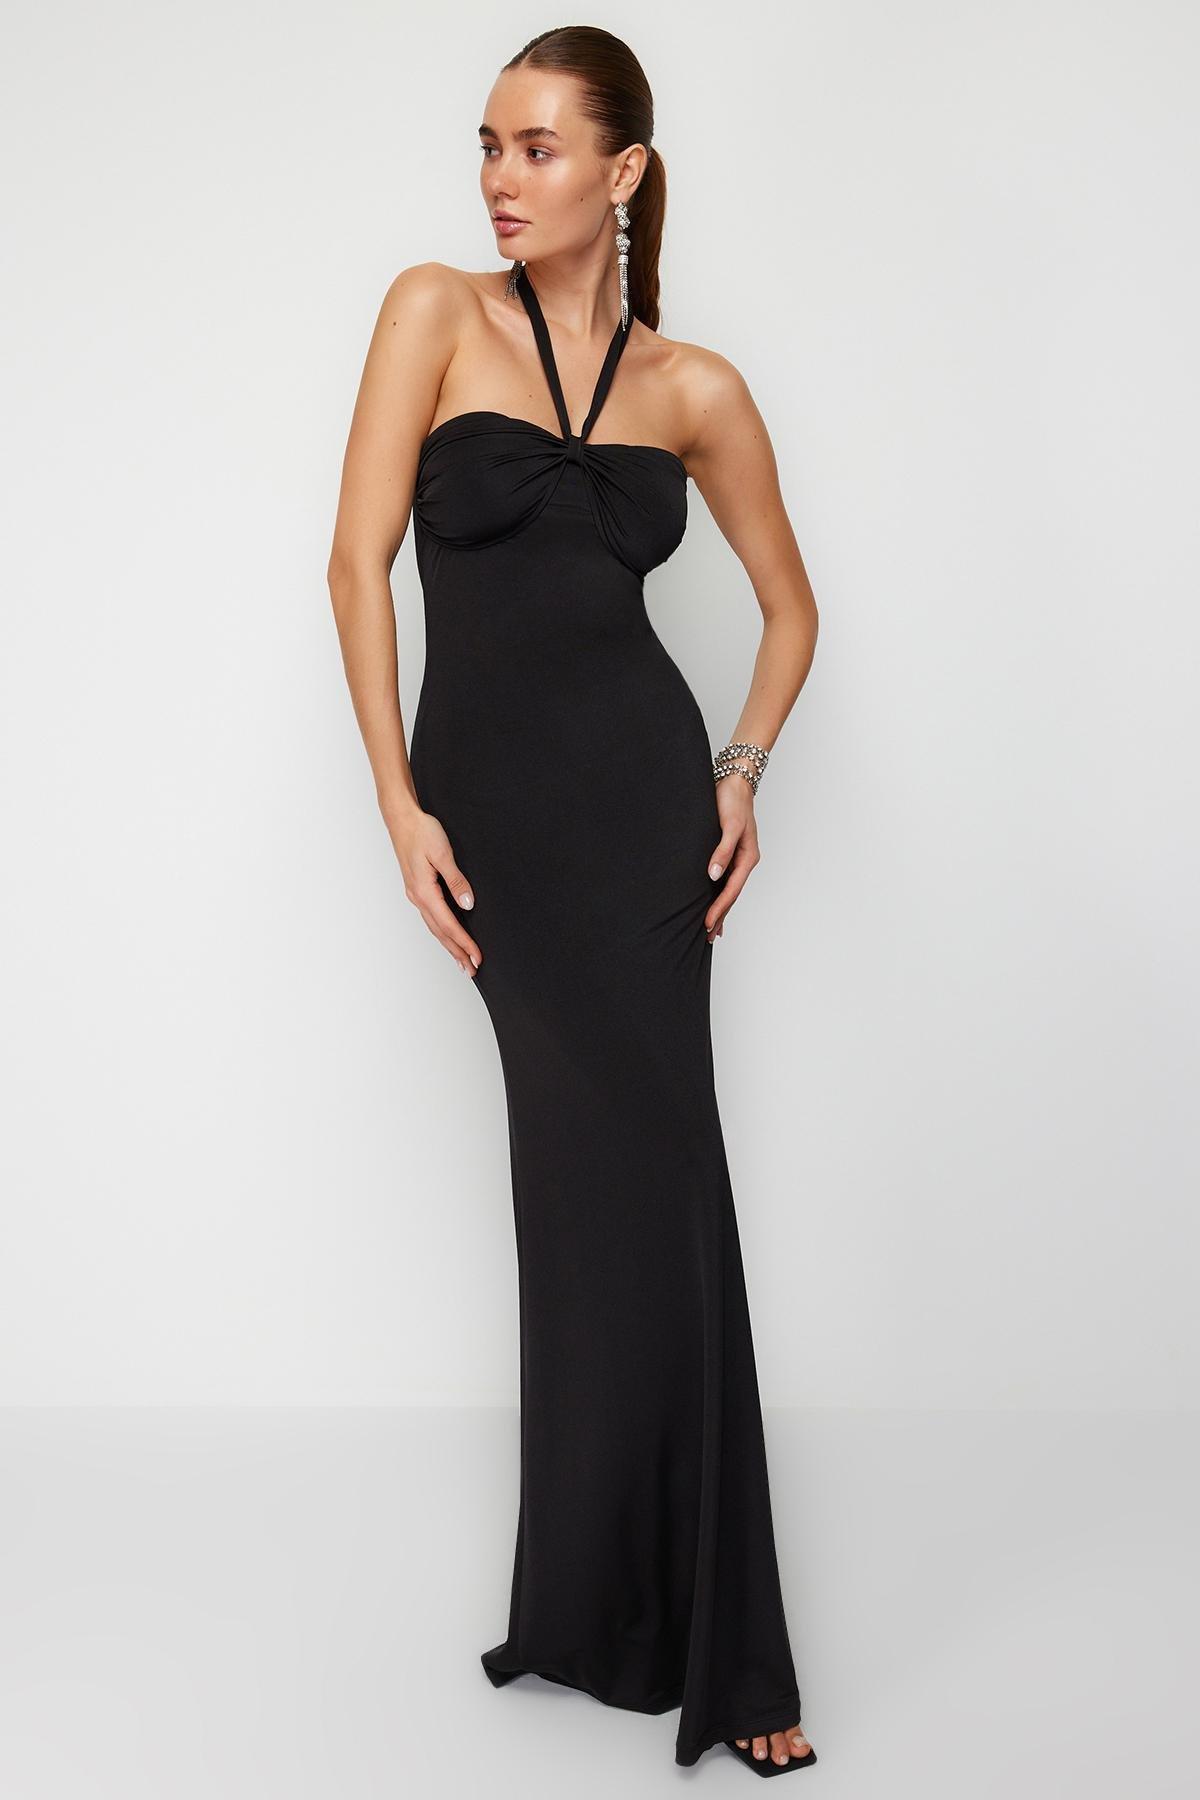 Trendyol - Black Mermaid Occasionwear Dress